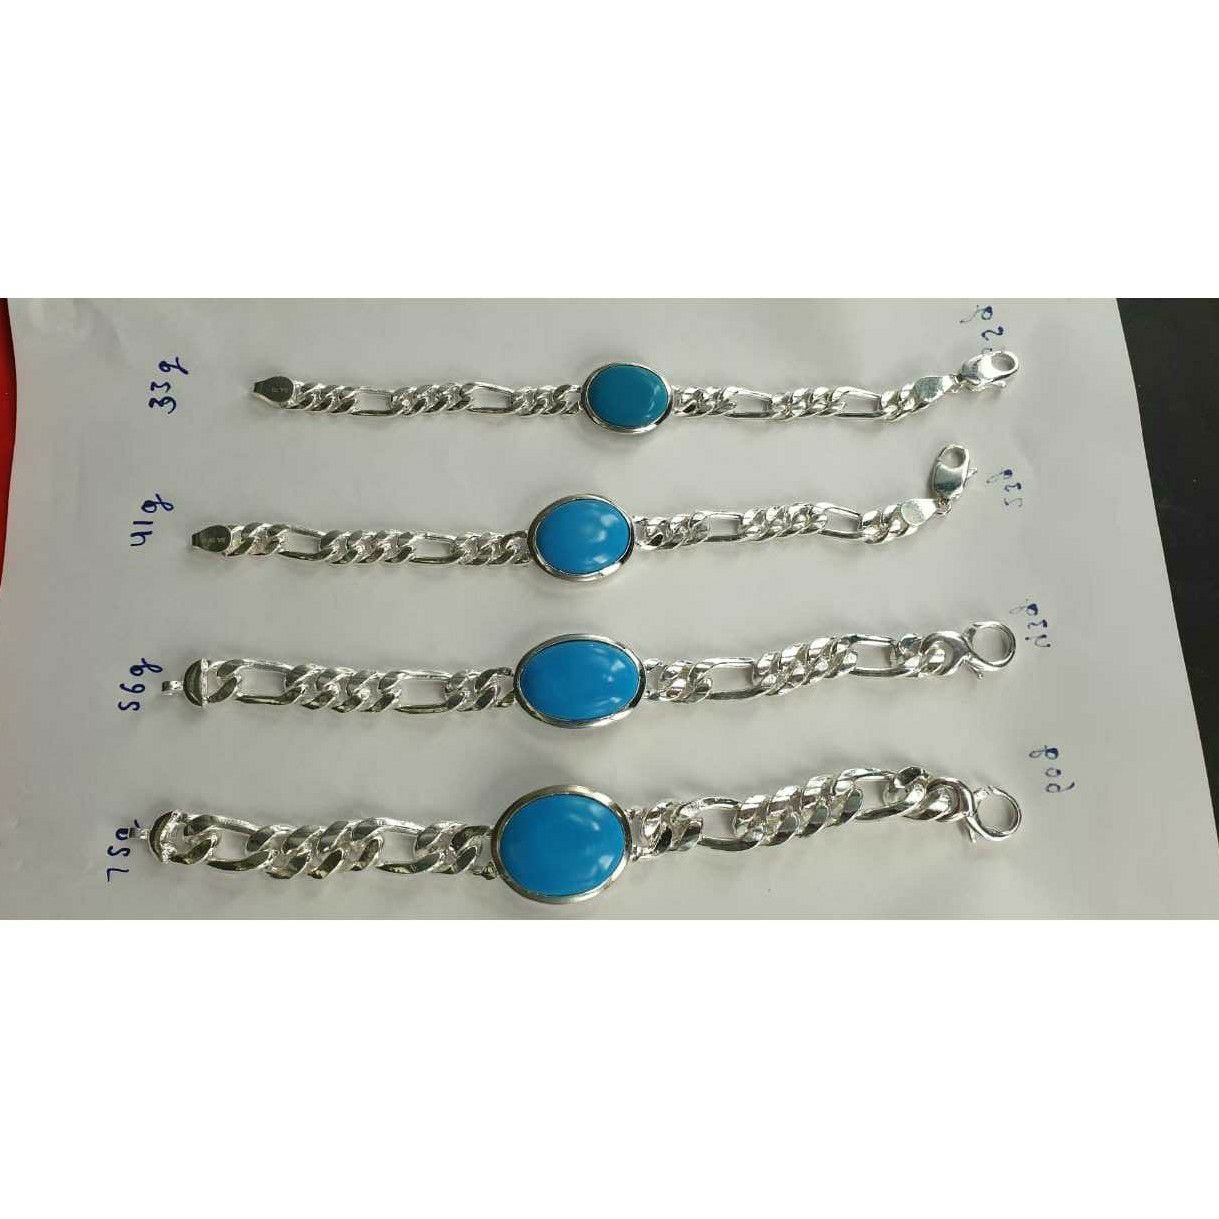 SALMAN KHAN Style Turquoise Black Stone Steel Bracelet 23cm / 9inches Long  | eBay